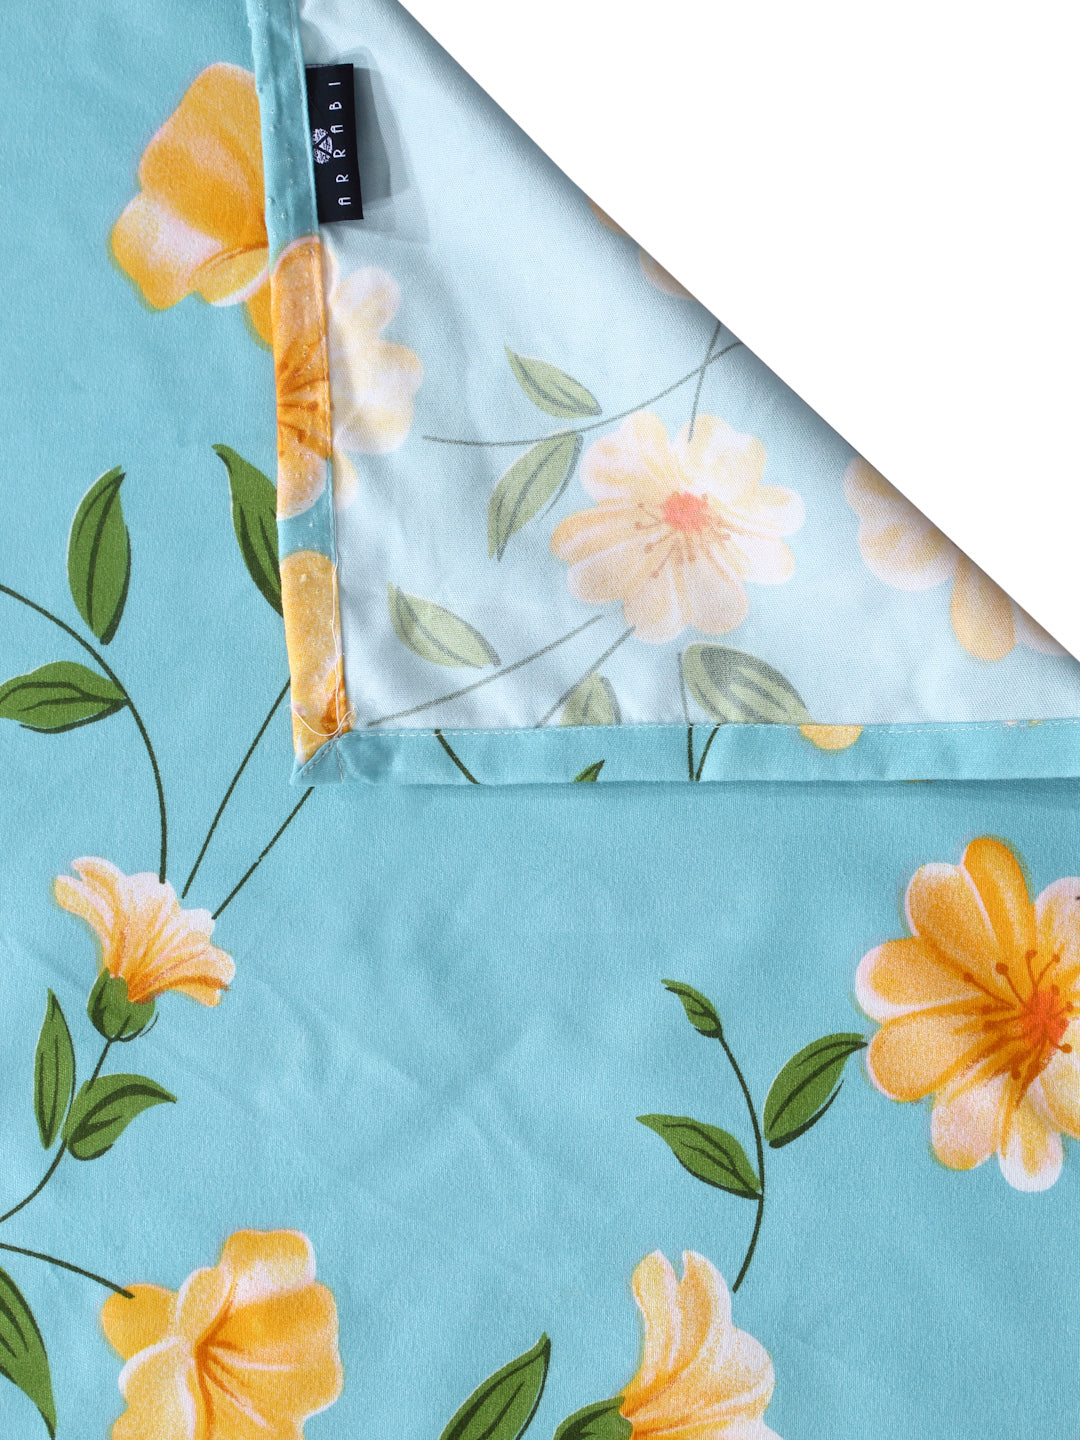 Arrabi Teal Floral Cotton Blend 6 SEATER Table Cover (180 X 130 cm)